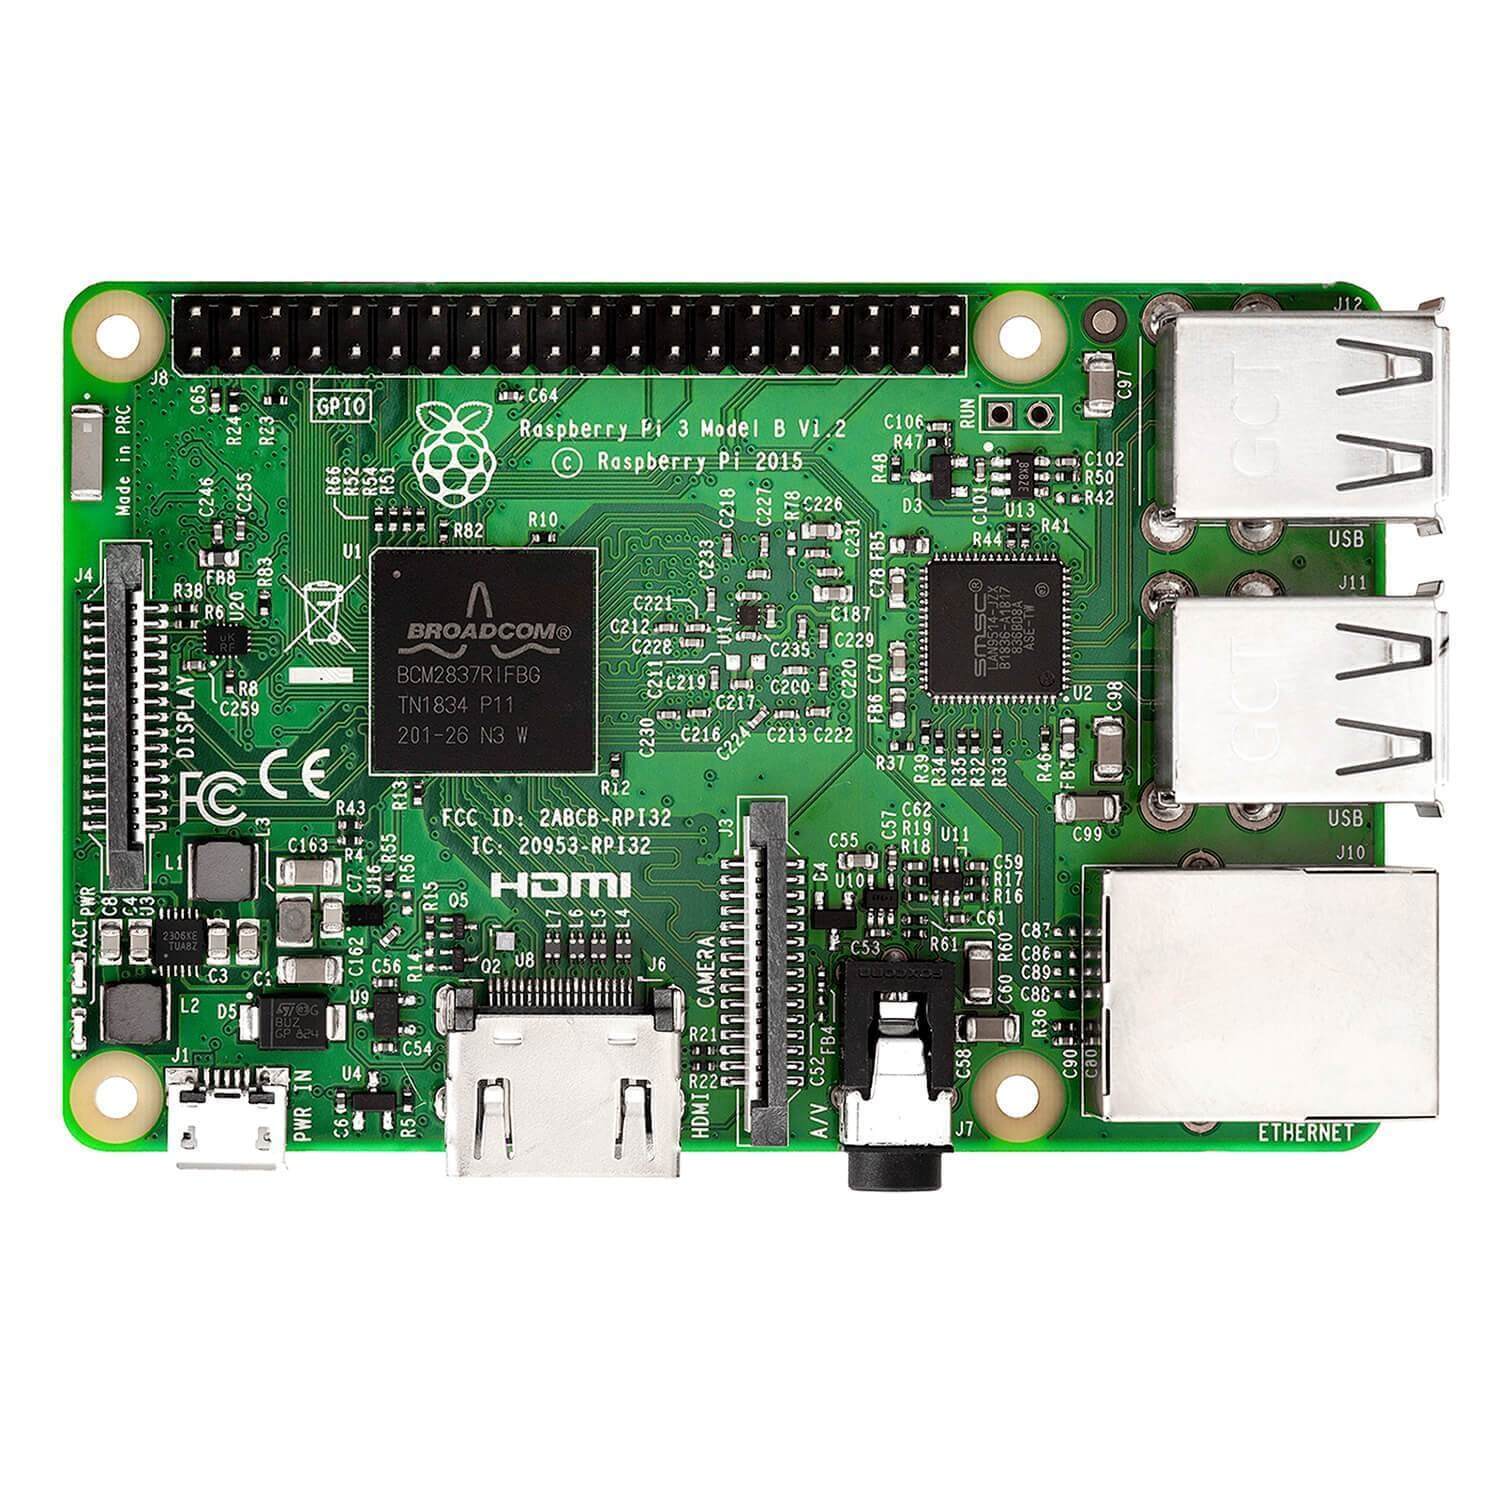 Raspberry Pi 3 Model B mit 1,2 GHz CPU und WiFi/BLE - AZ-Delivery